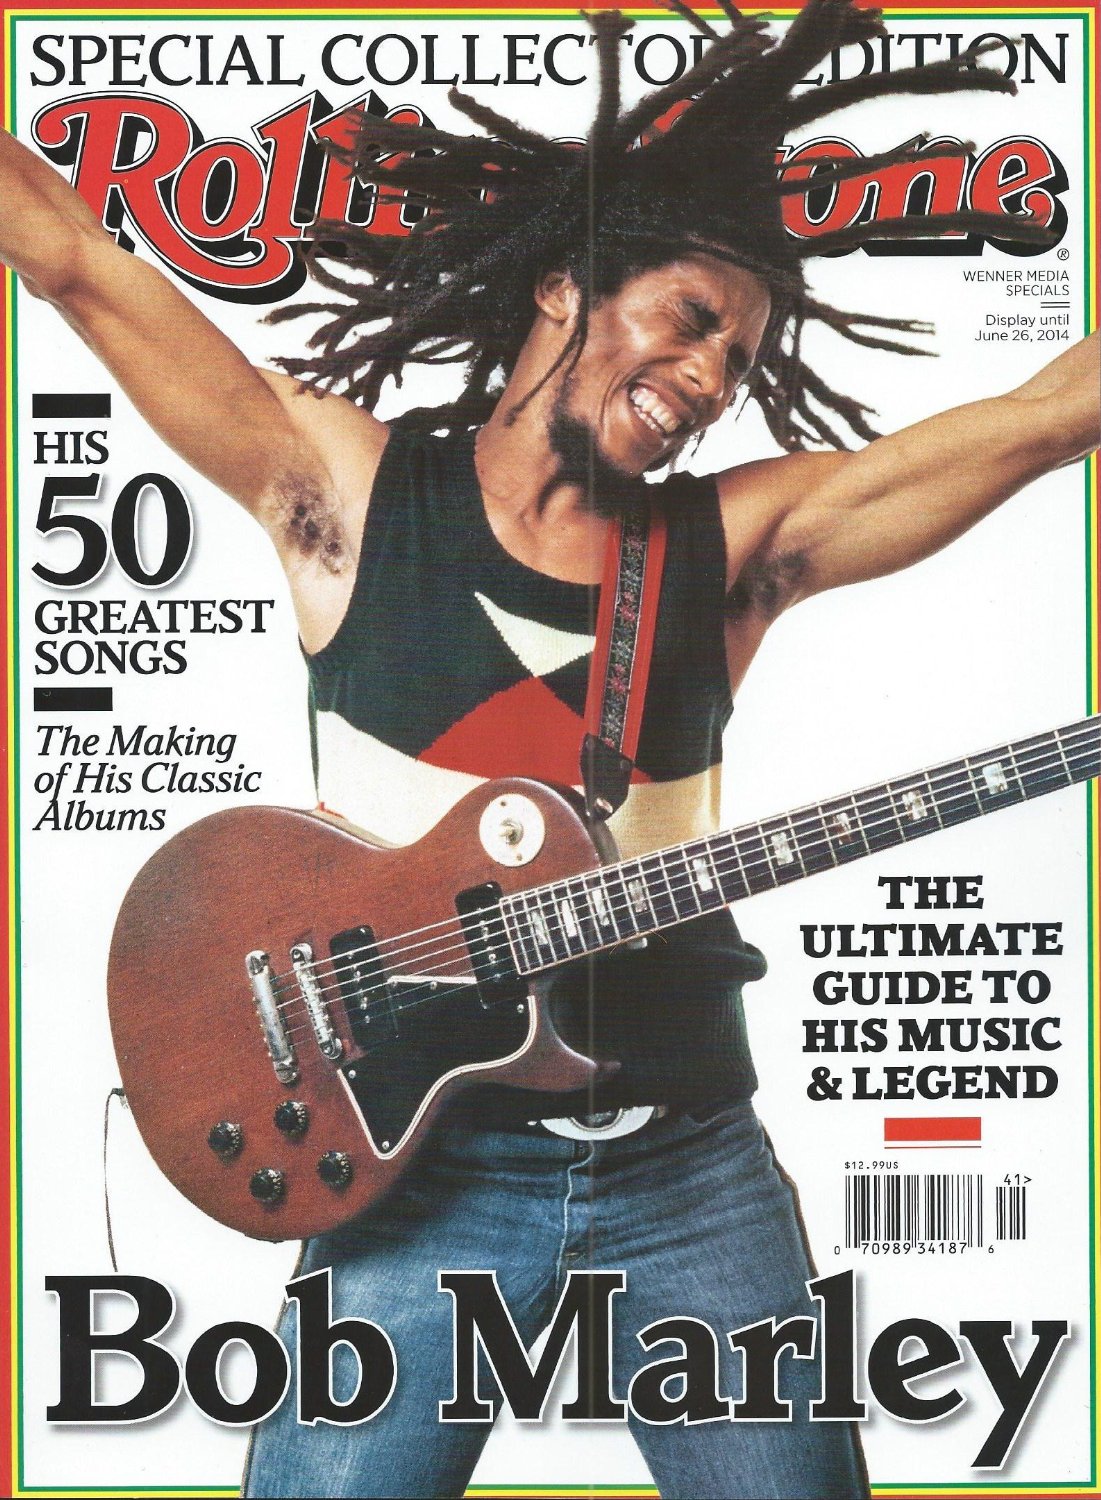 Bob Marley’s 50 greatest songs according to Rolling Stone Magazine | Reggaemani1101 x 1500